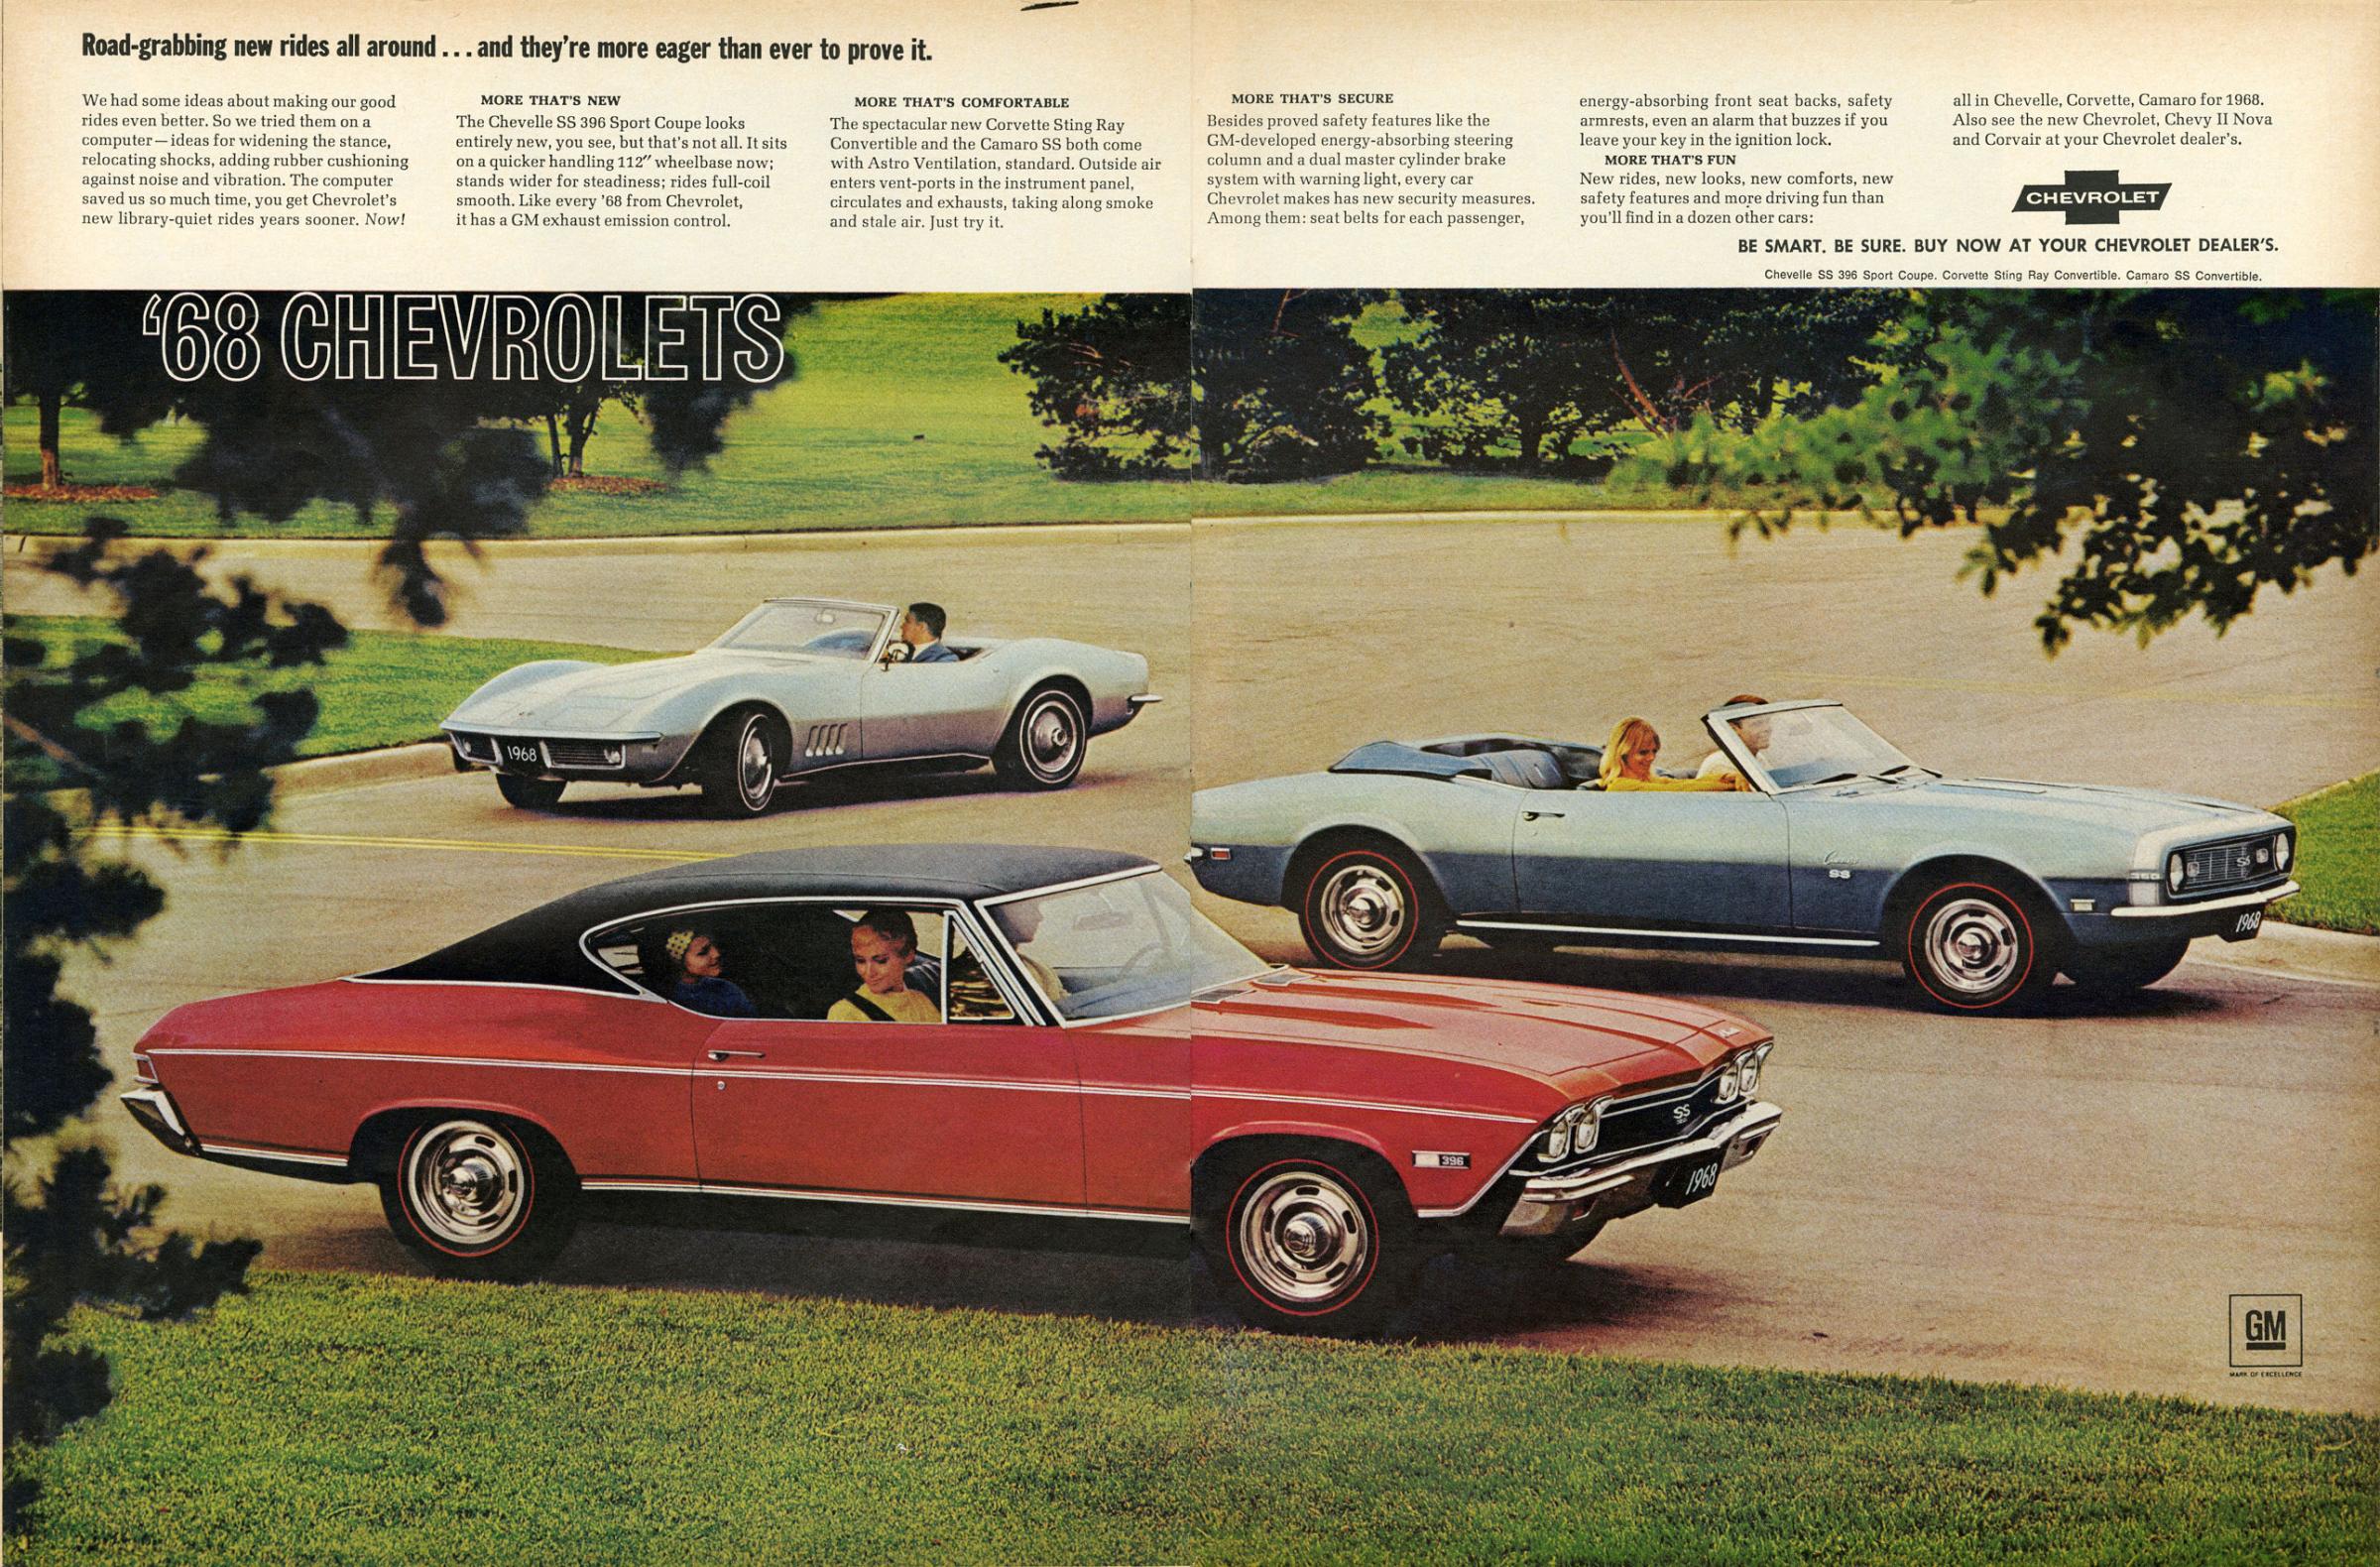 LIFE Magazine Chevrolet ad, 1967